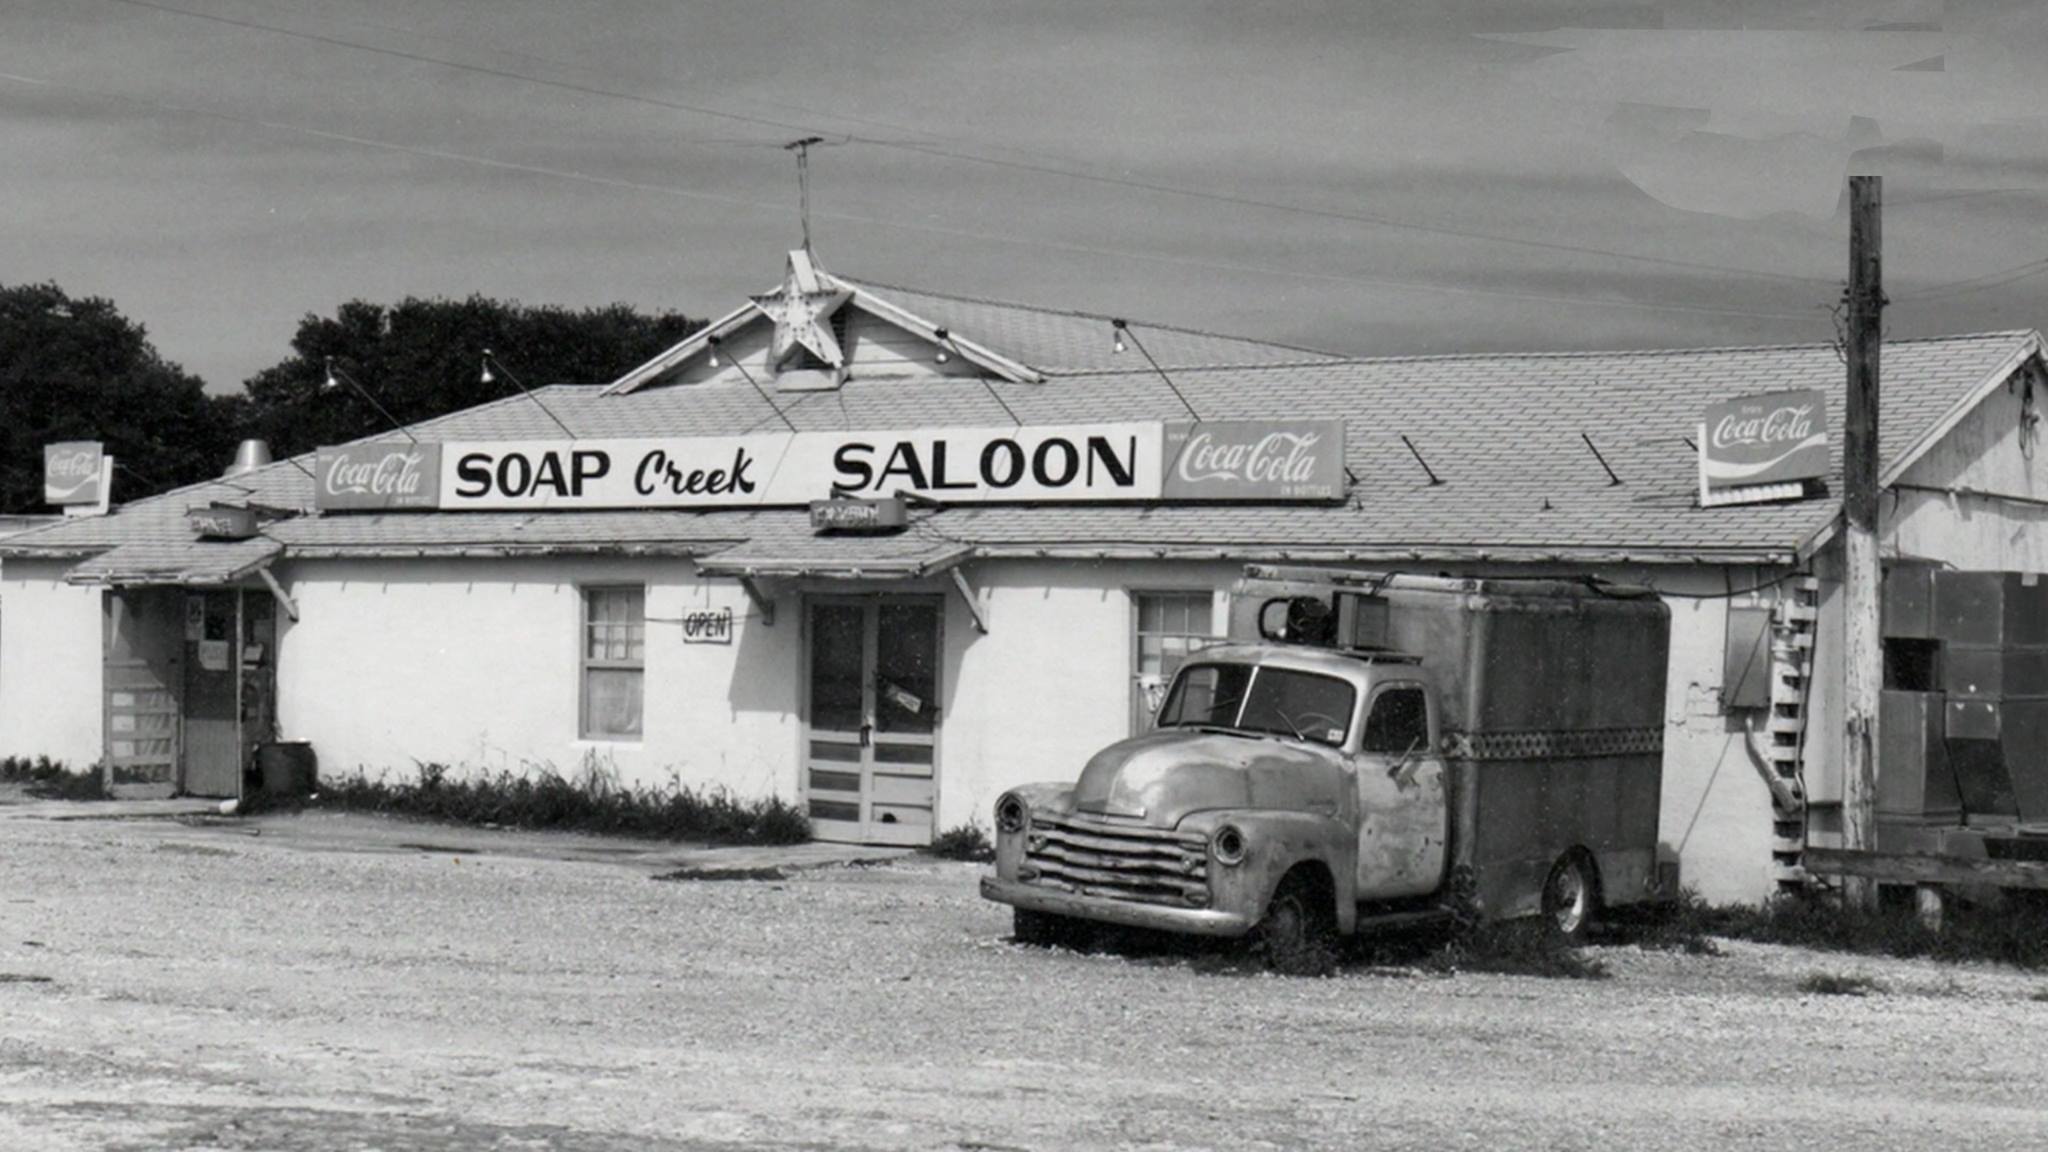 Soap Creek Saloon, Austin, Texas